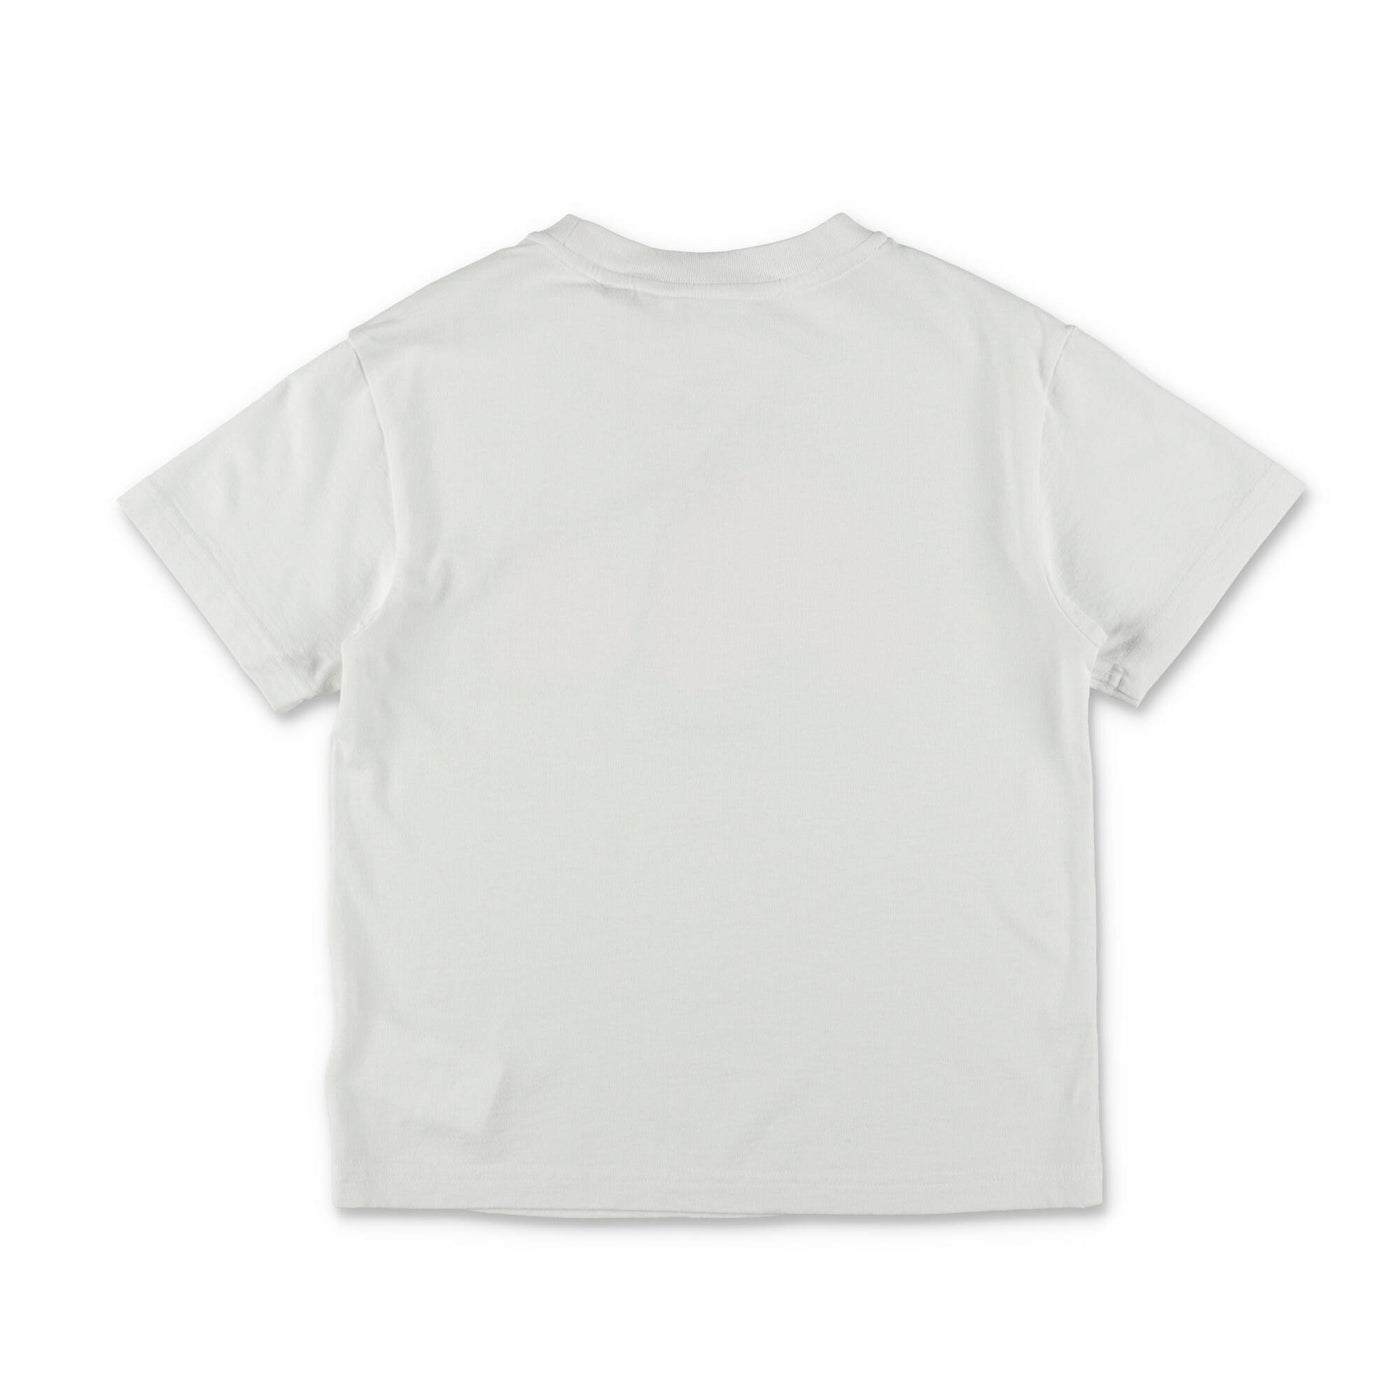 White cotton jersey boy PALM ANGELS t-shirt